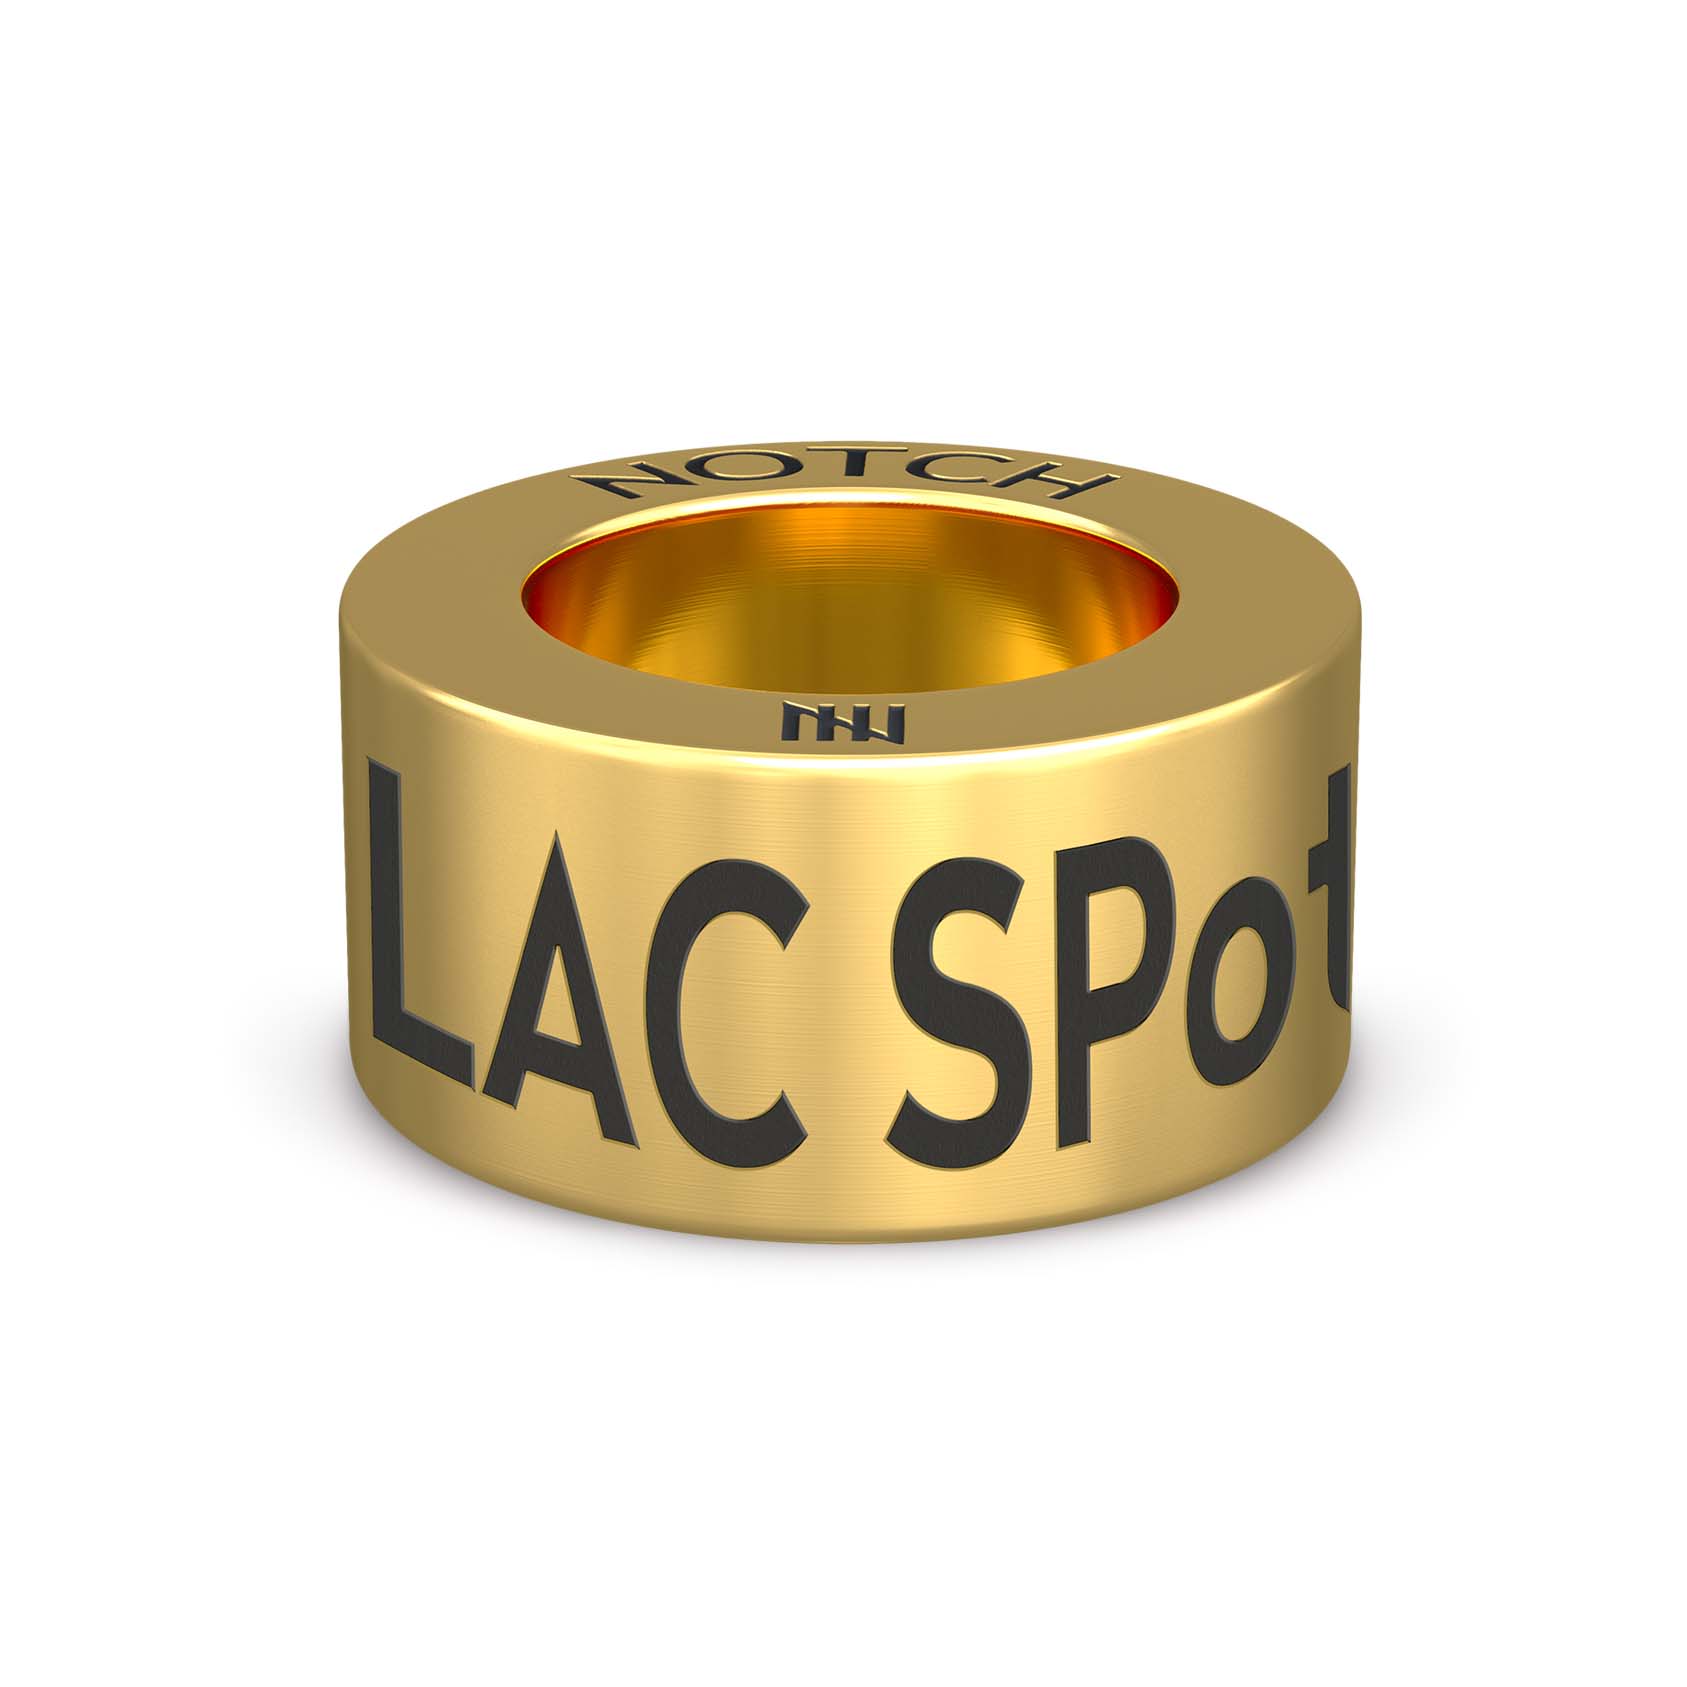 LAC SPotY NOTCH Charm